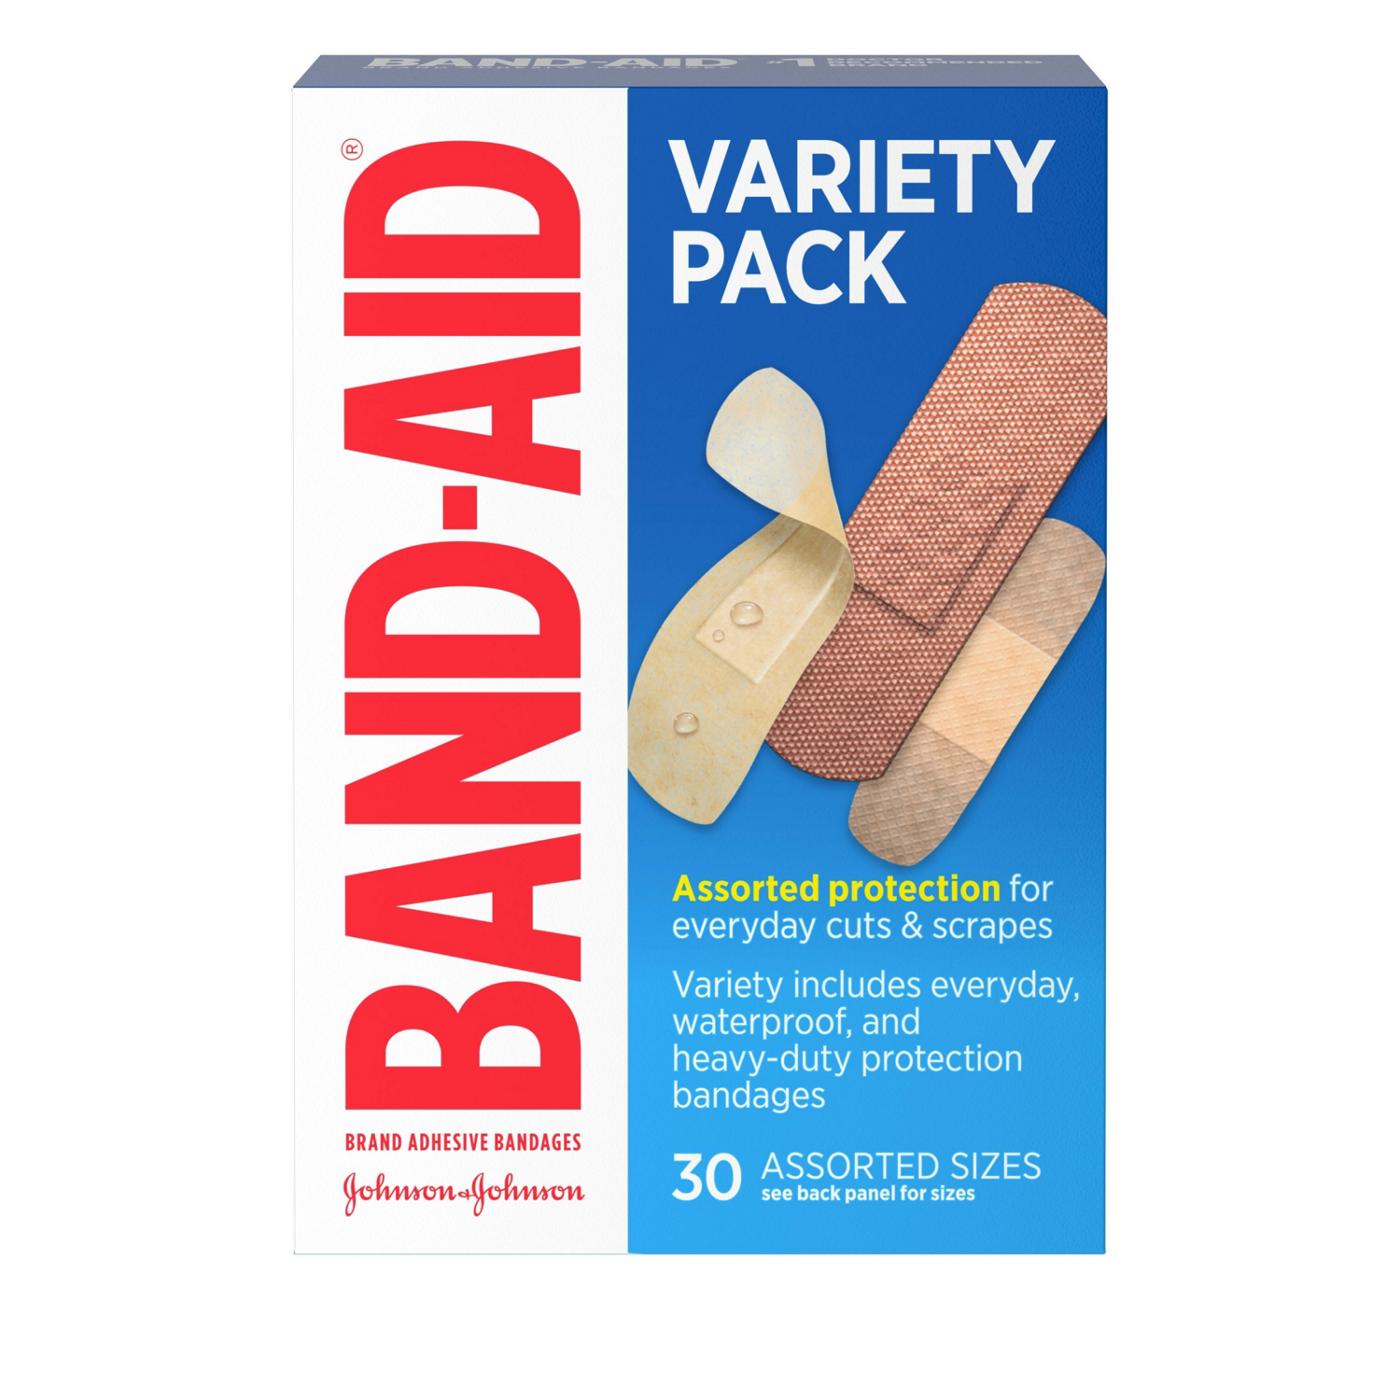 Band-Aid Adhesive Bandages Family Variety Pack; image 1 of 2